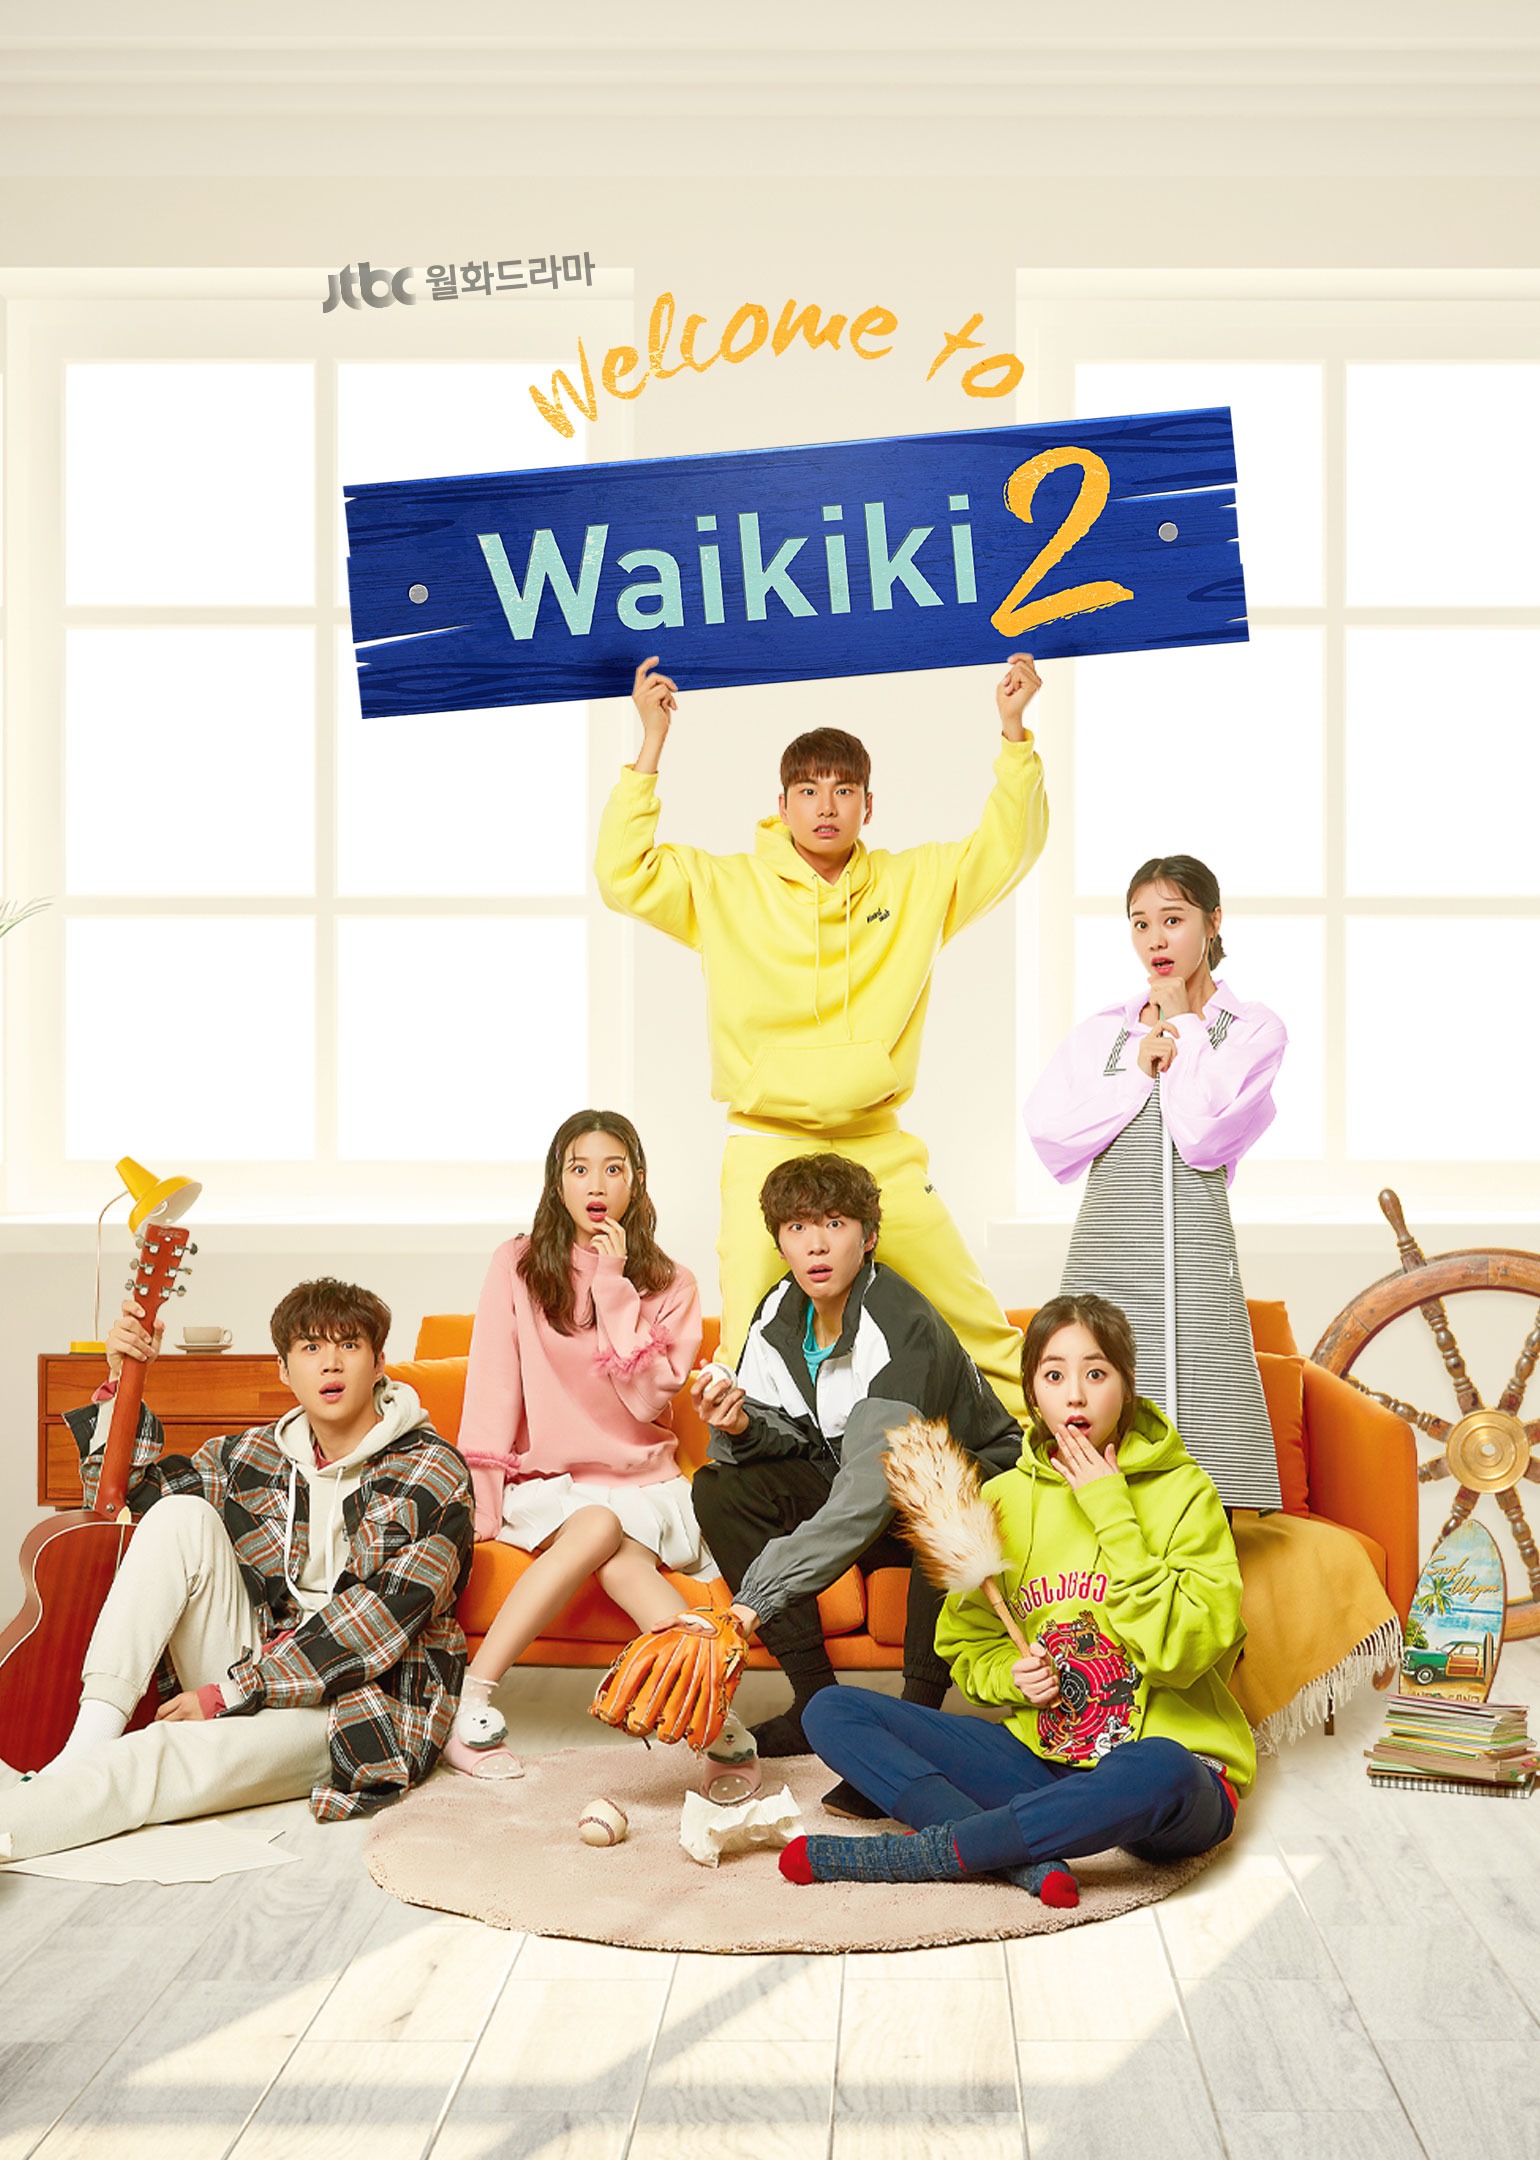 Welcome to waikiki